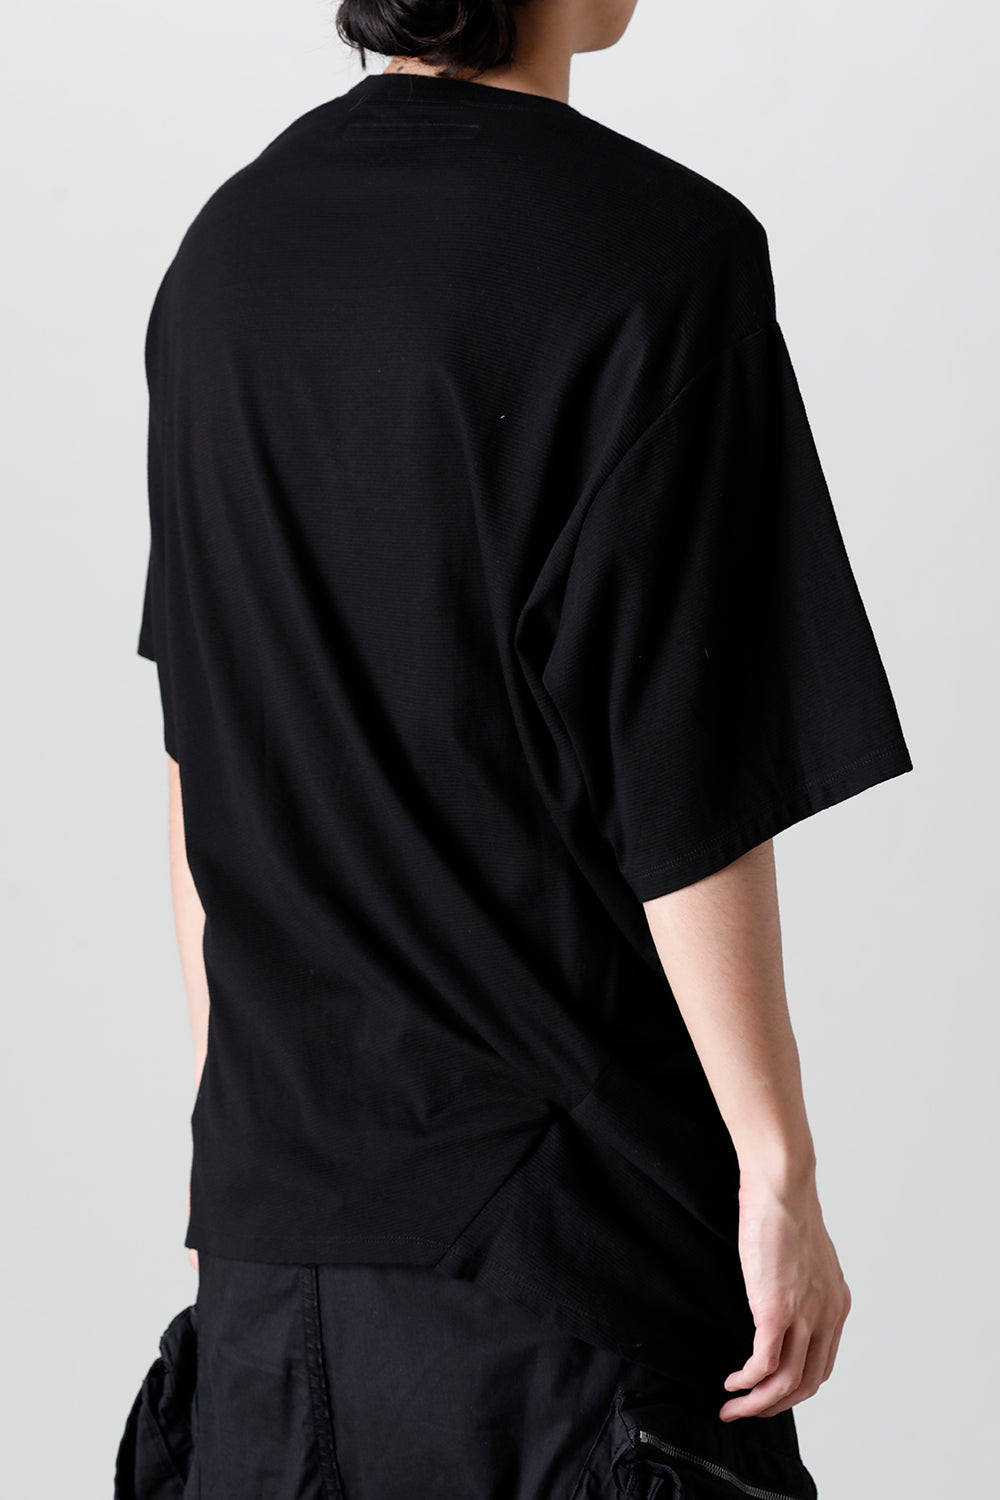 ‘DUSK’ Twist Tuck Short sleeve T-shirts